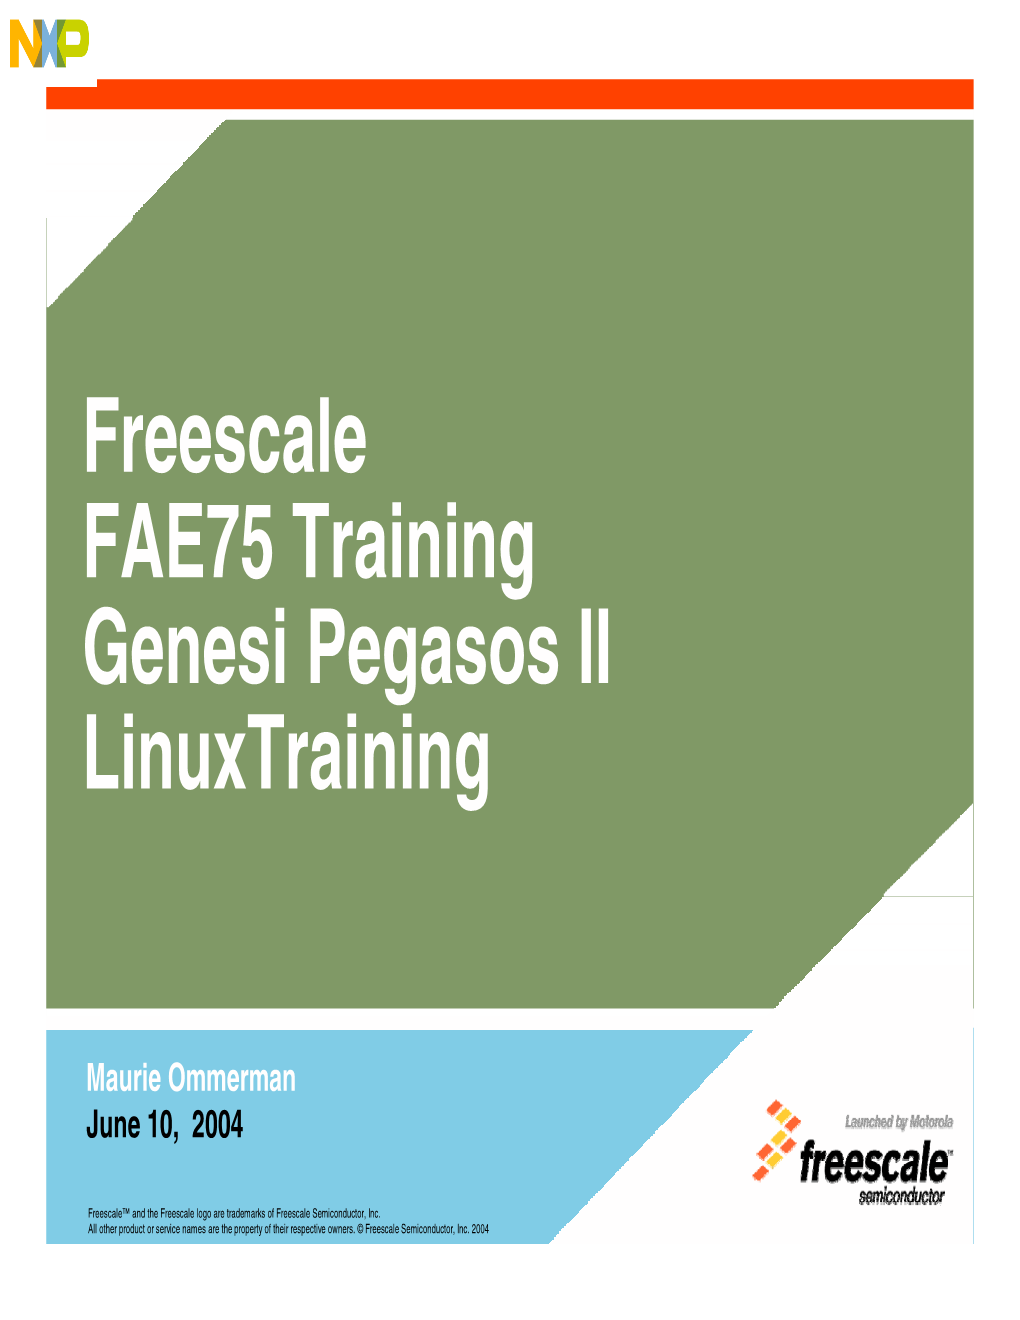 Freescale FAE75 Training Genesi Pegasos II Linuxtraining